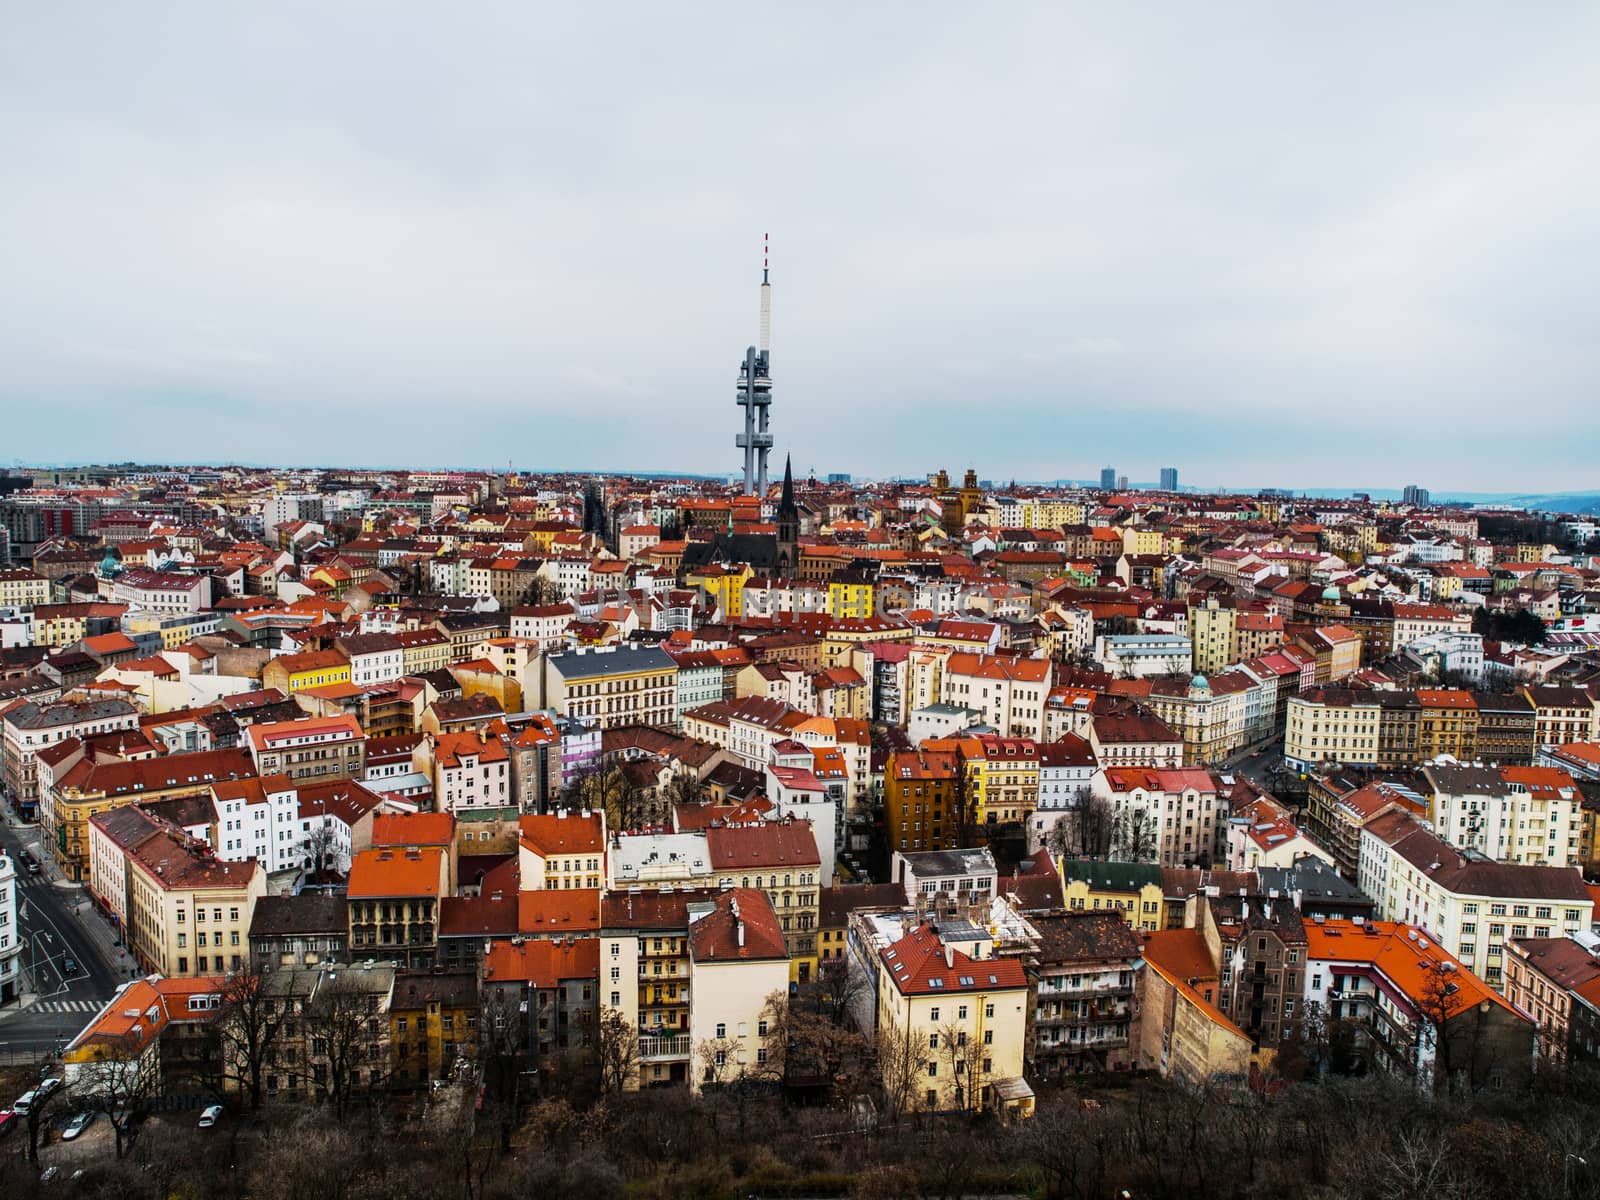 Zizkov rooftops and Zizkov tower in Prague